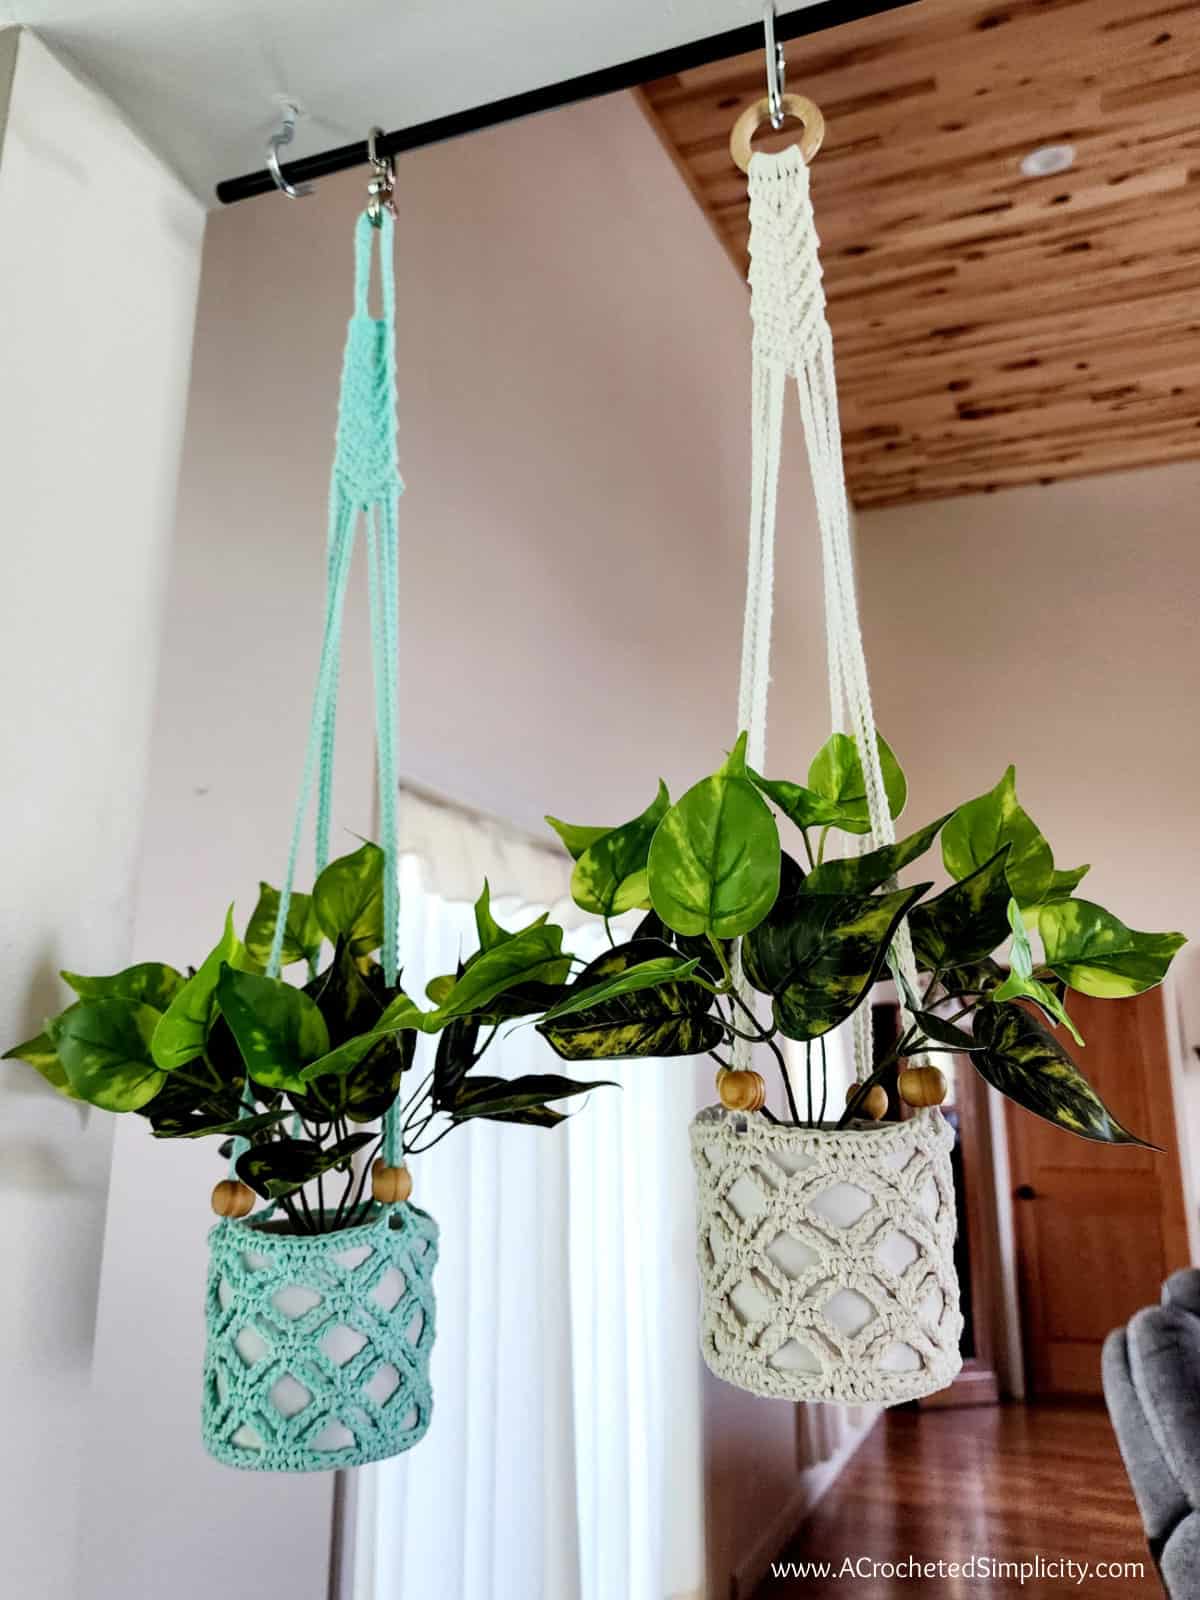 Two medium crochet plant hangers in ecru and sea glass cotton yarn.